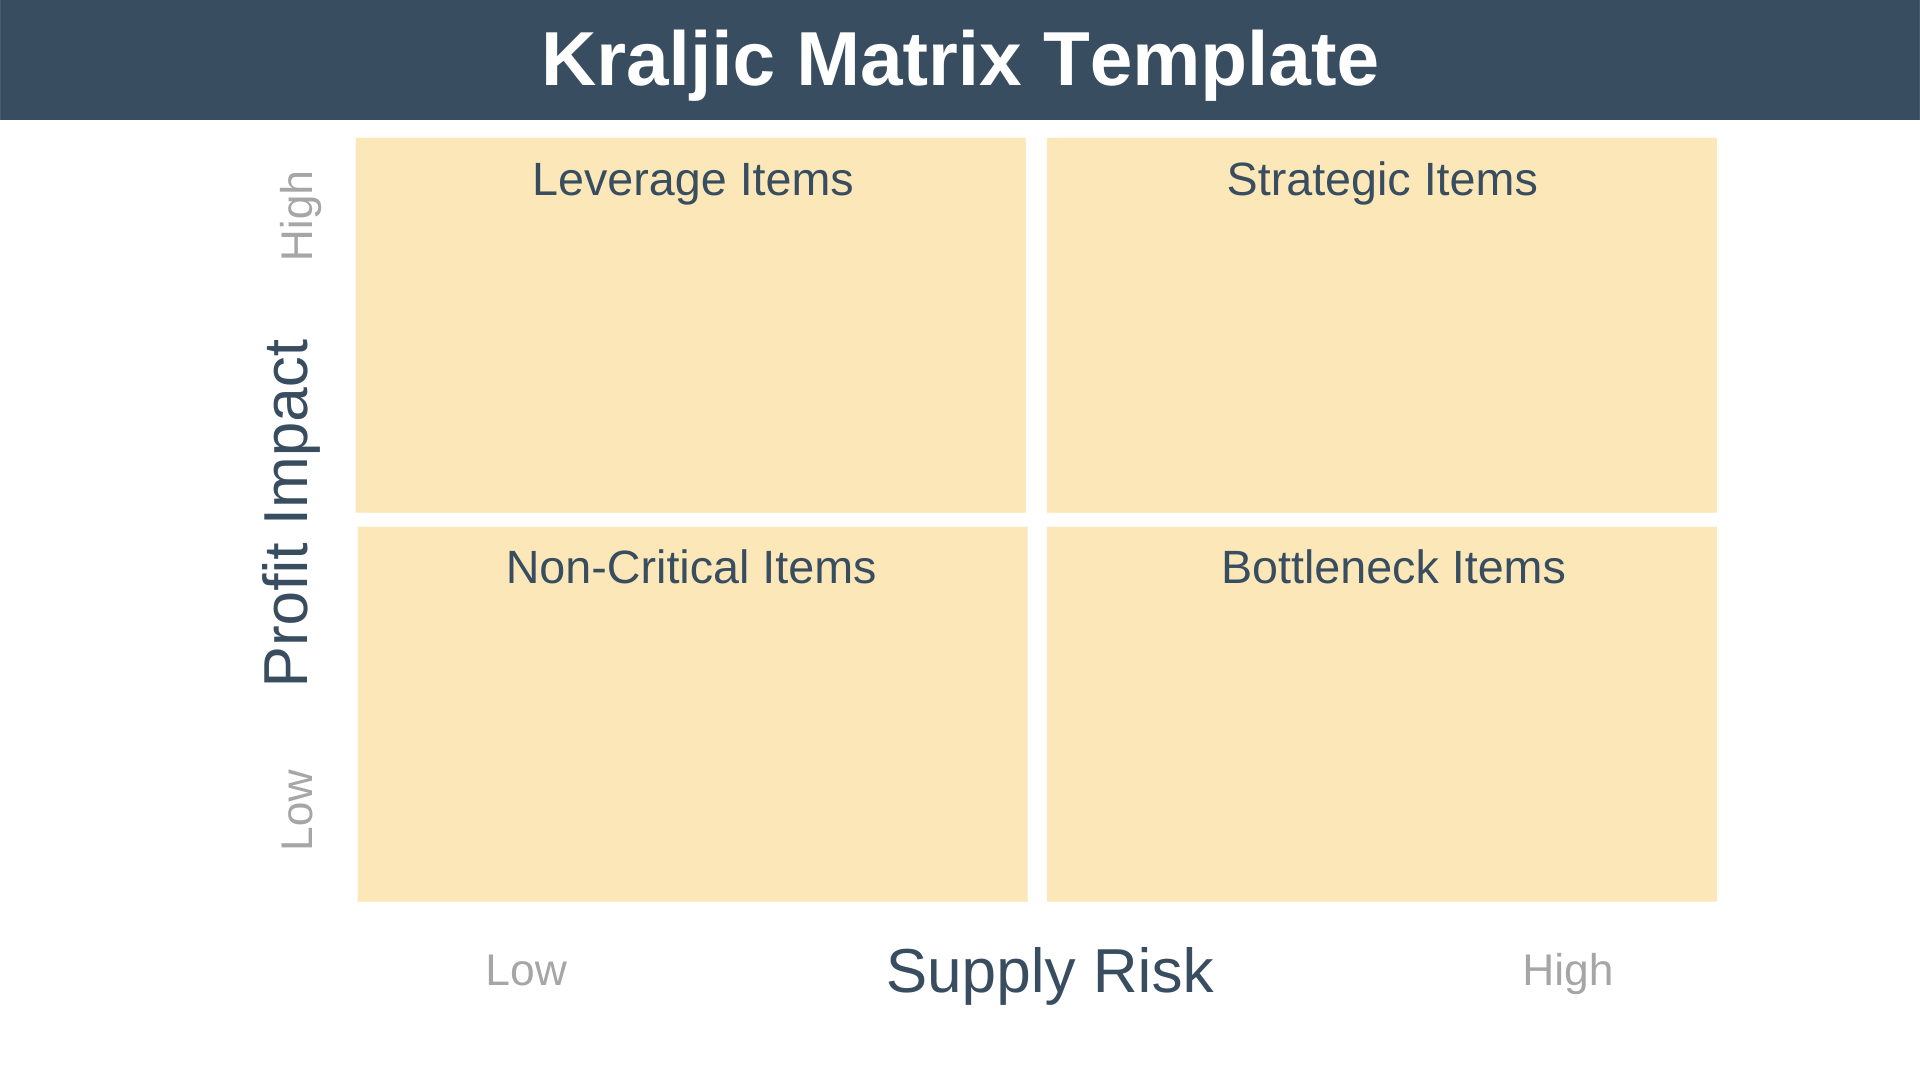 kraljic-matrix-template-excel-free